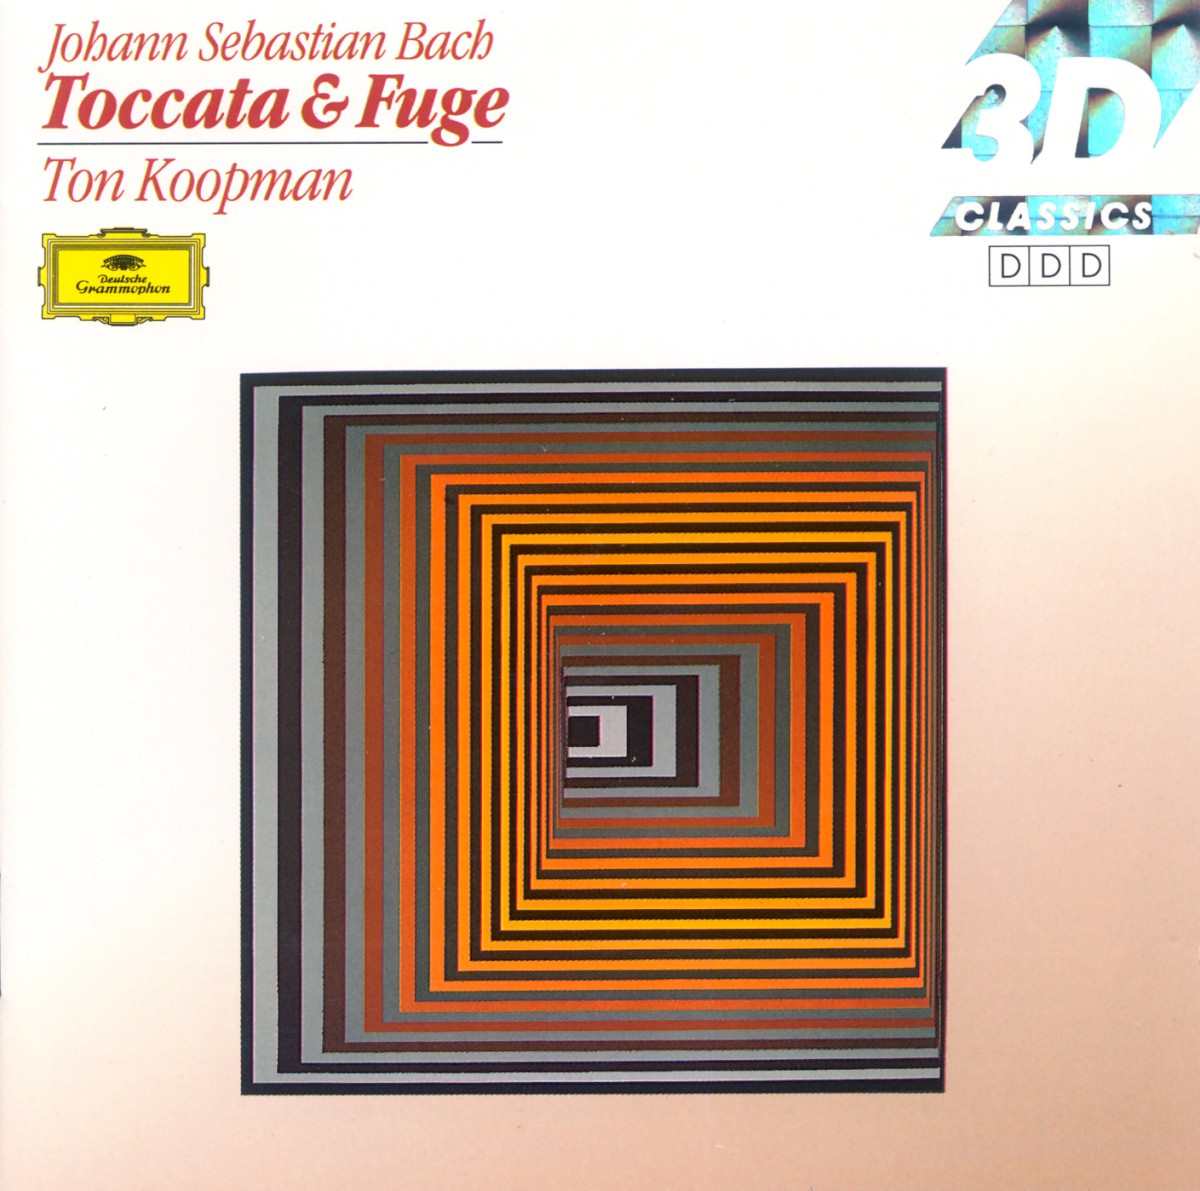 Release “Toccata & Fuge” by Johann Sebastian Bach; Ton